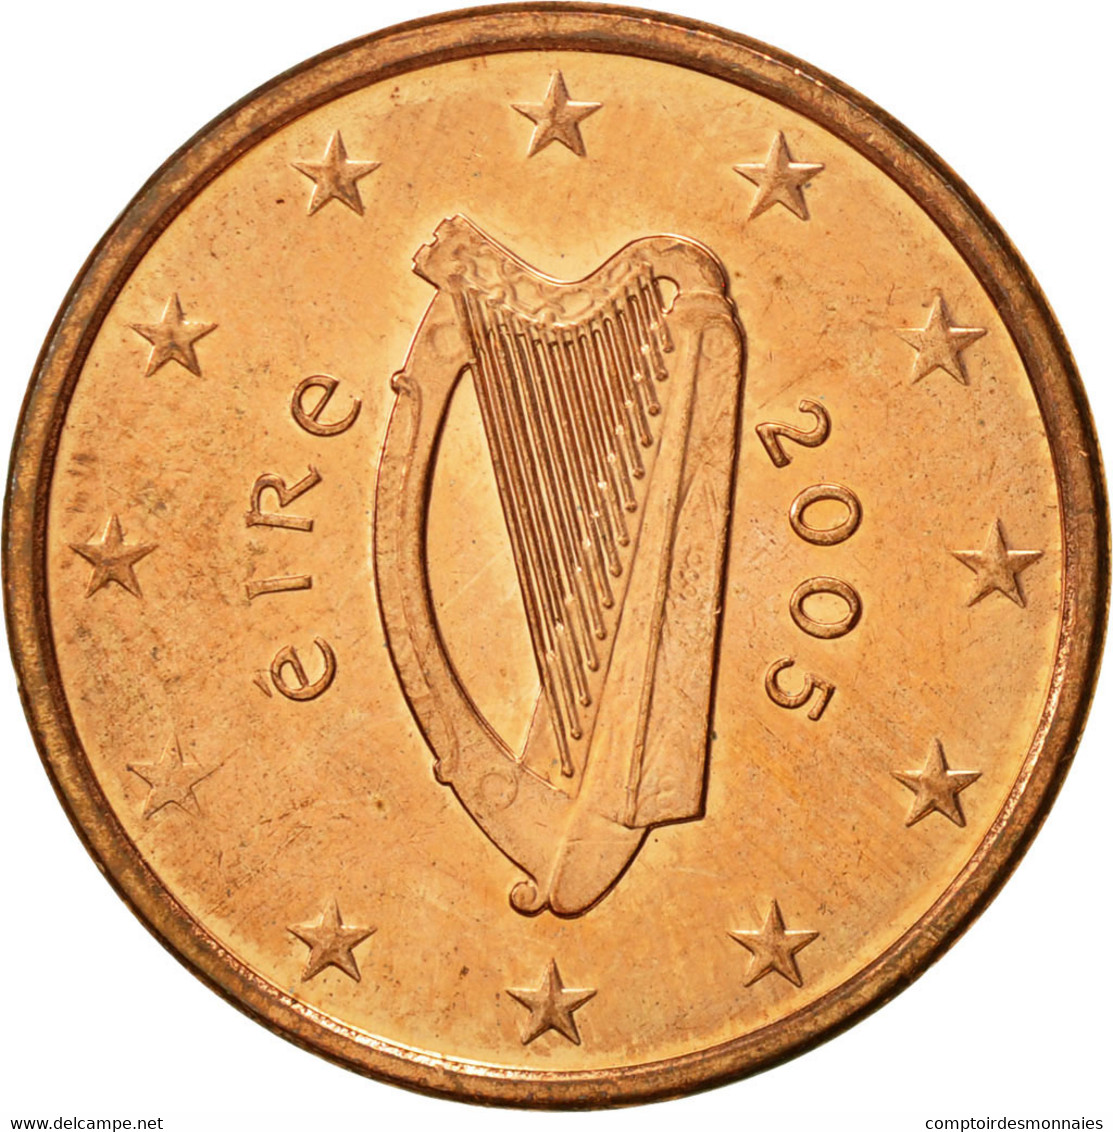 IRELAND REPUBLIC, 5 Euro Cent, 2005, TTB, Copper Plated Steel, KM:34 - Irland